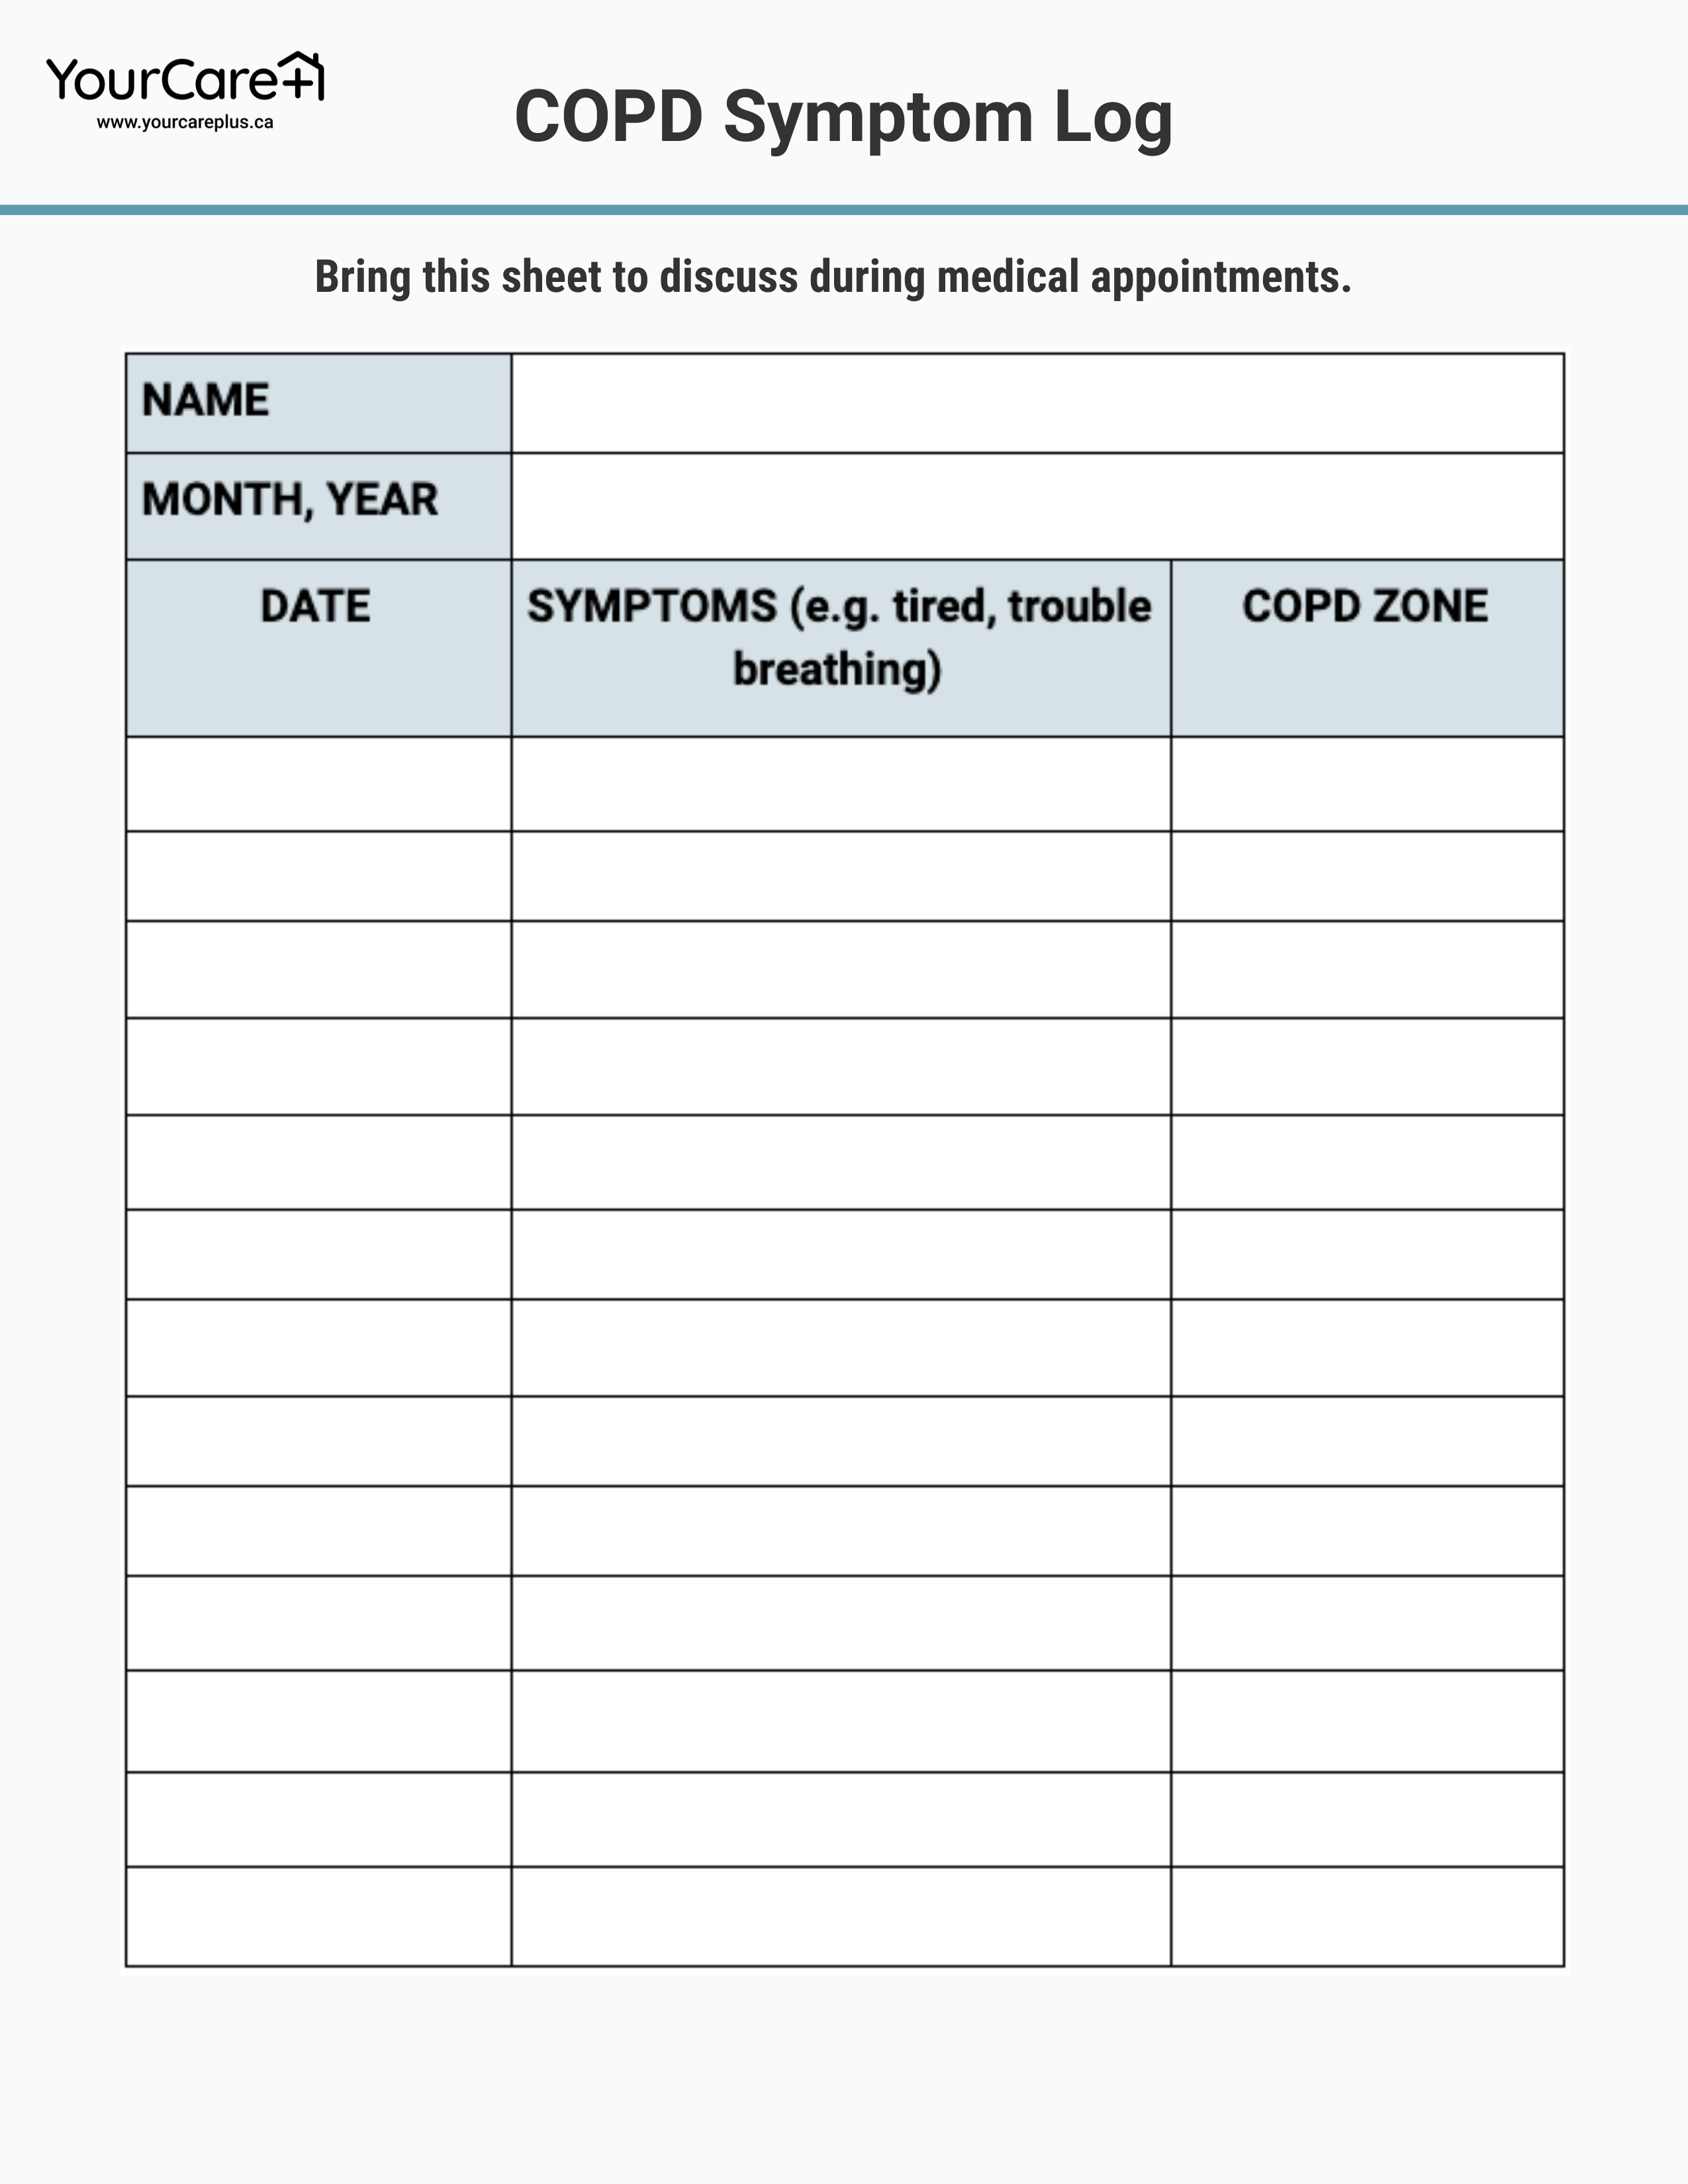 COPD Symptom Log